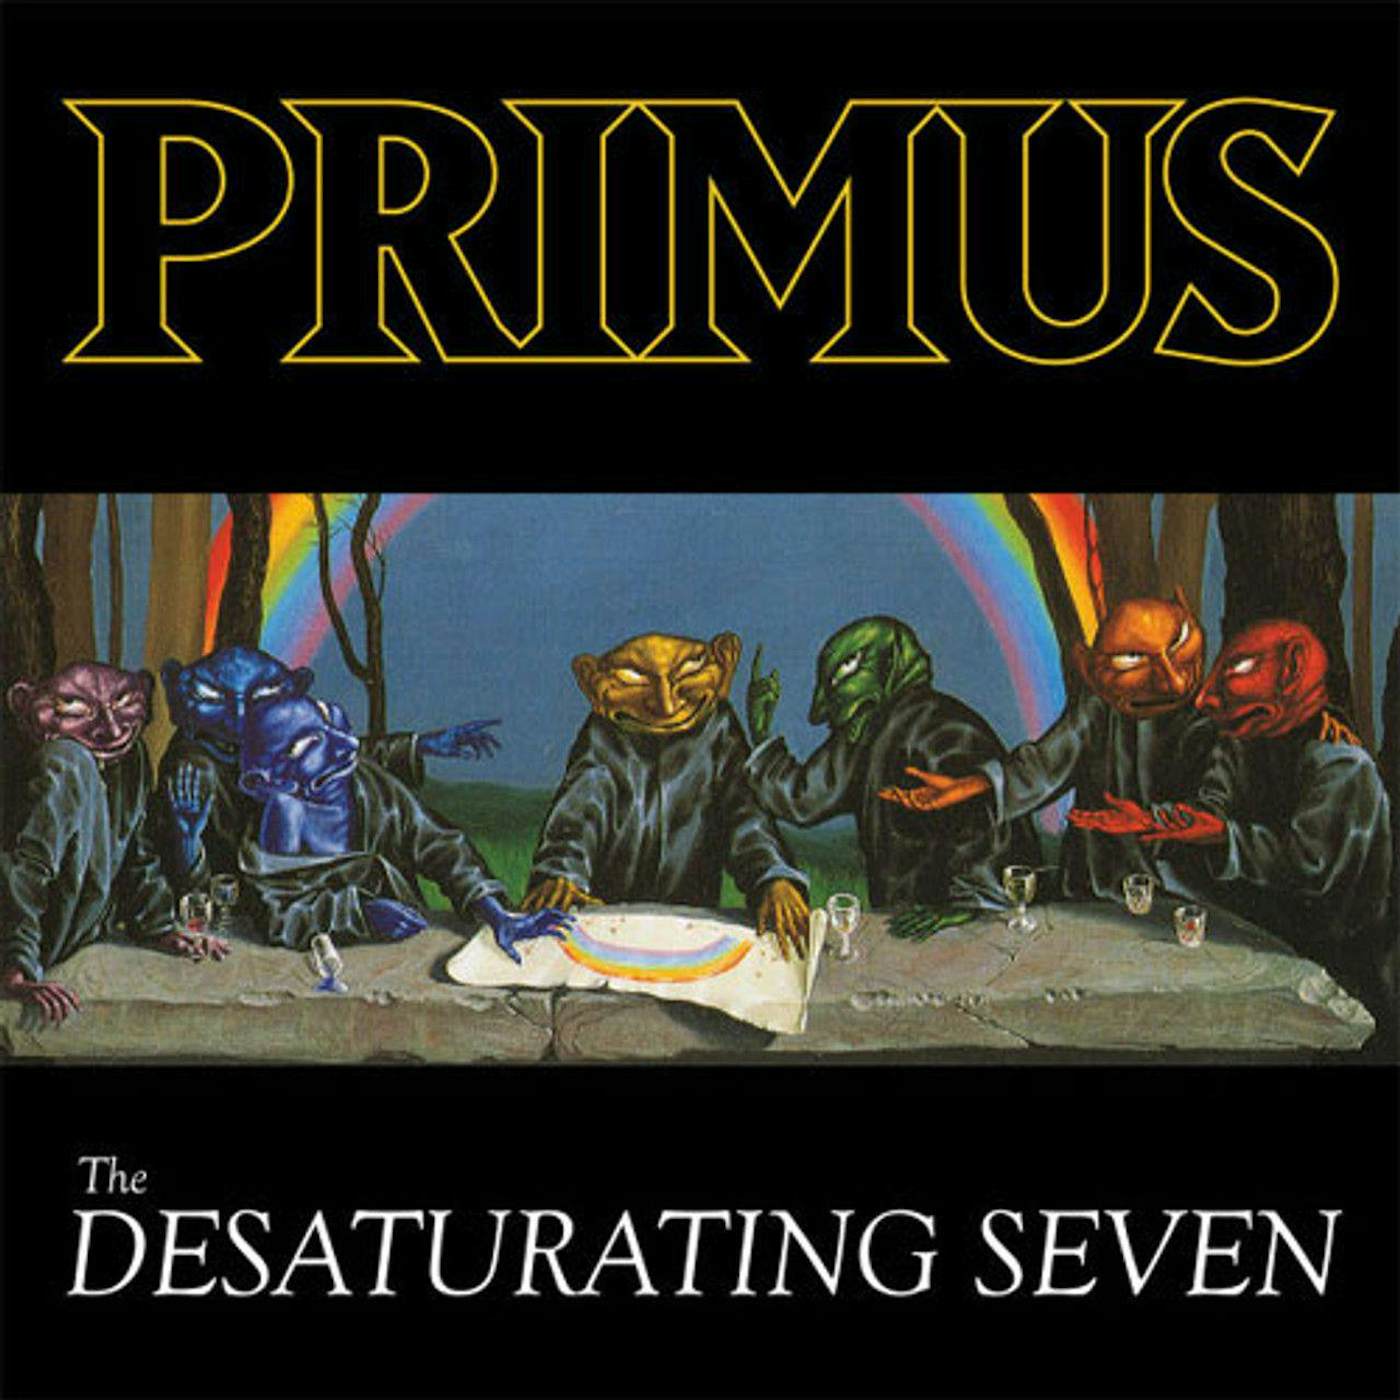 Primus Desaturating Seven (Clear-rainbow Splatter) Vinyl Record